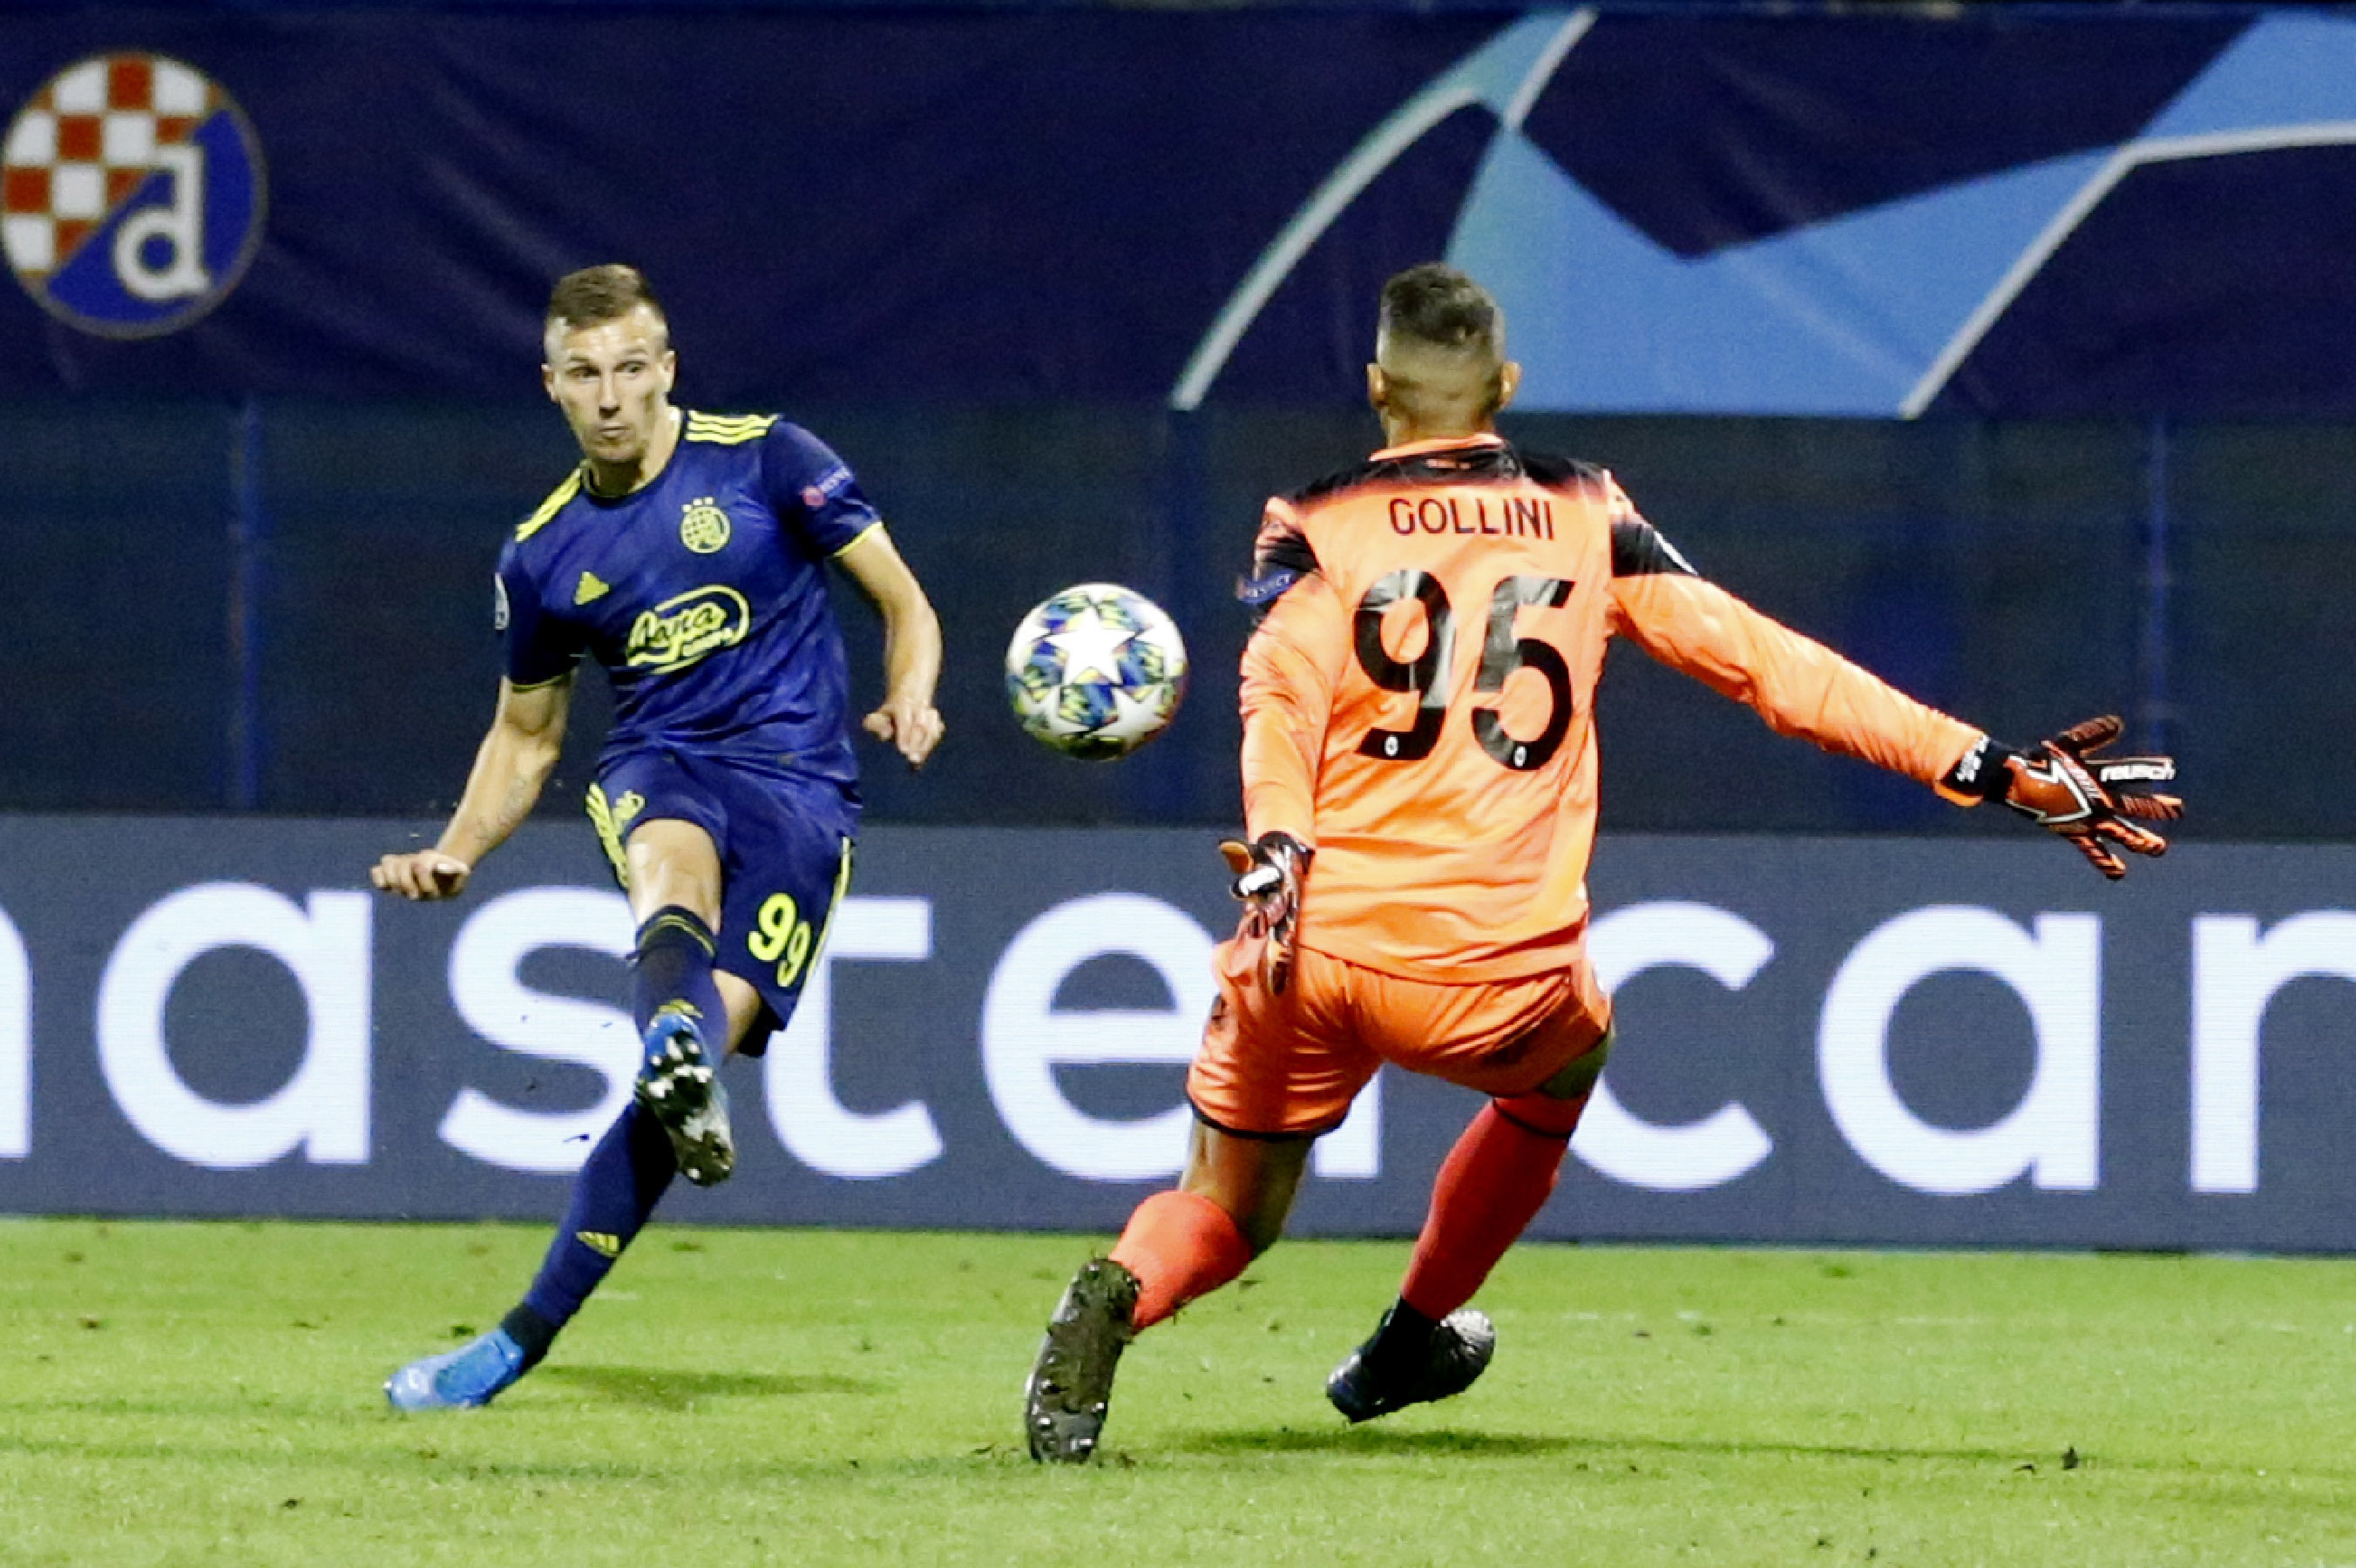 Orsic hat trick helps Dinamo Zagreb end 11-match losing run